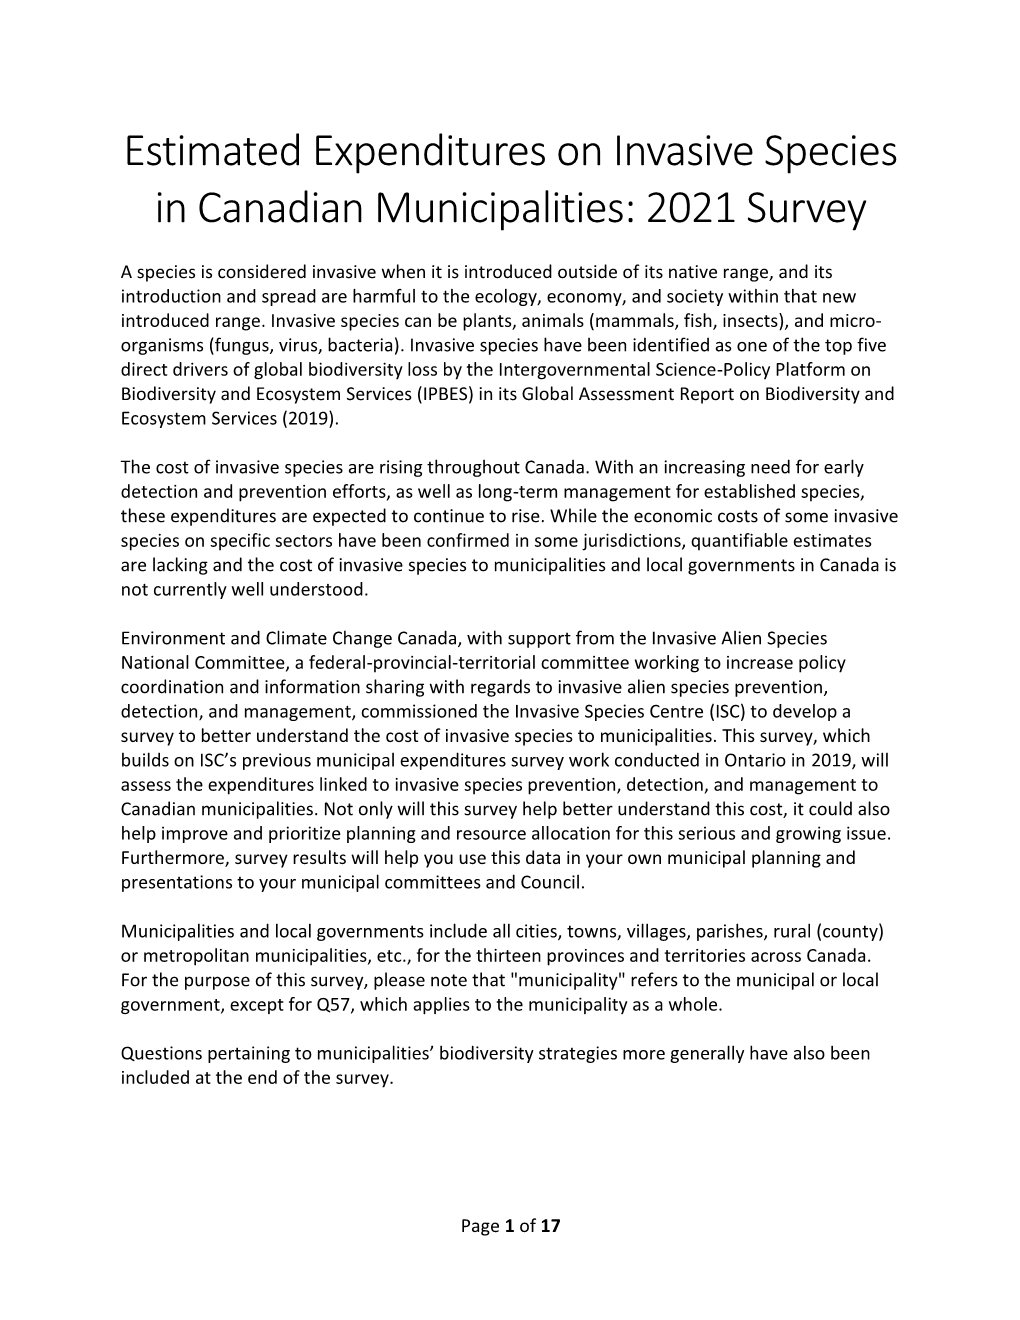 Estimated Expenditures on Invasive Species in Canadian Municipalities: 2021 Survey